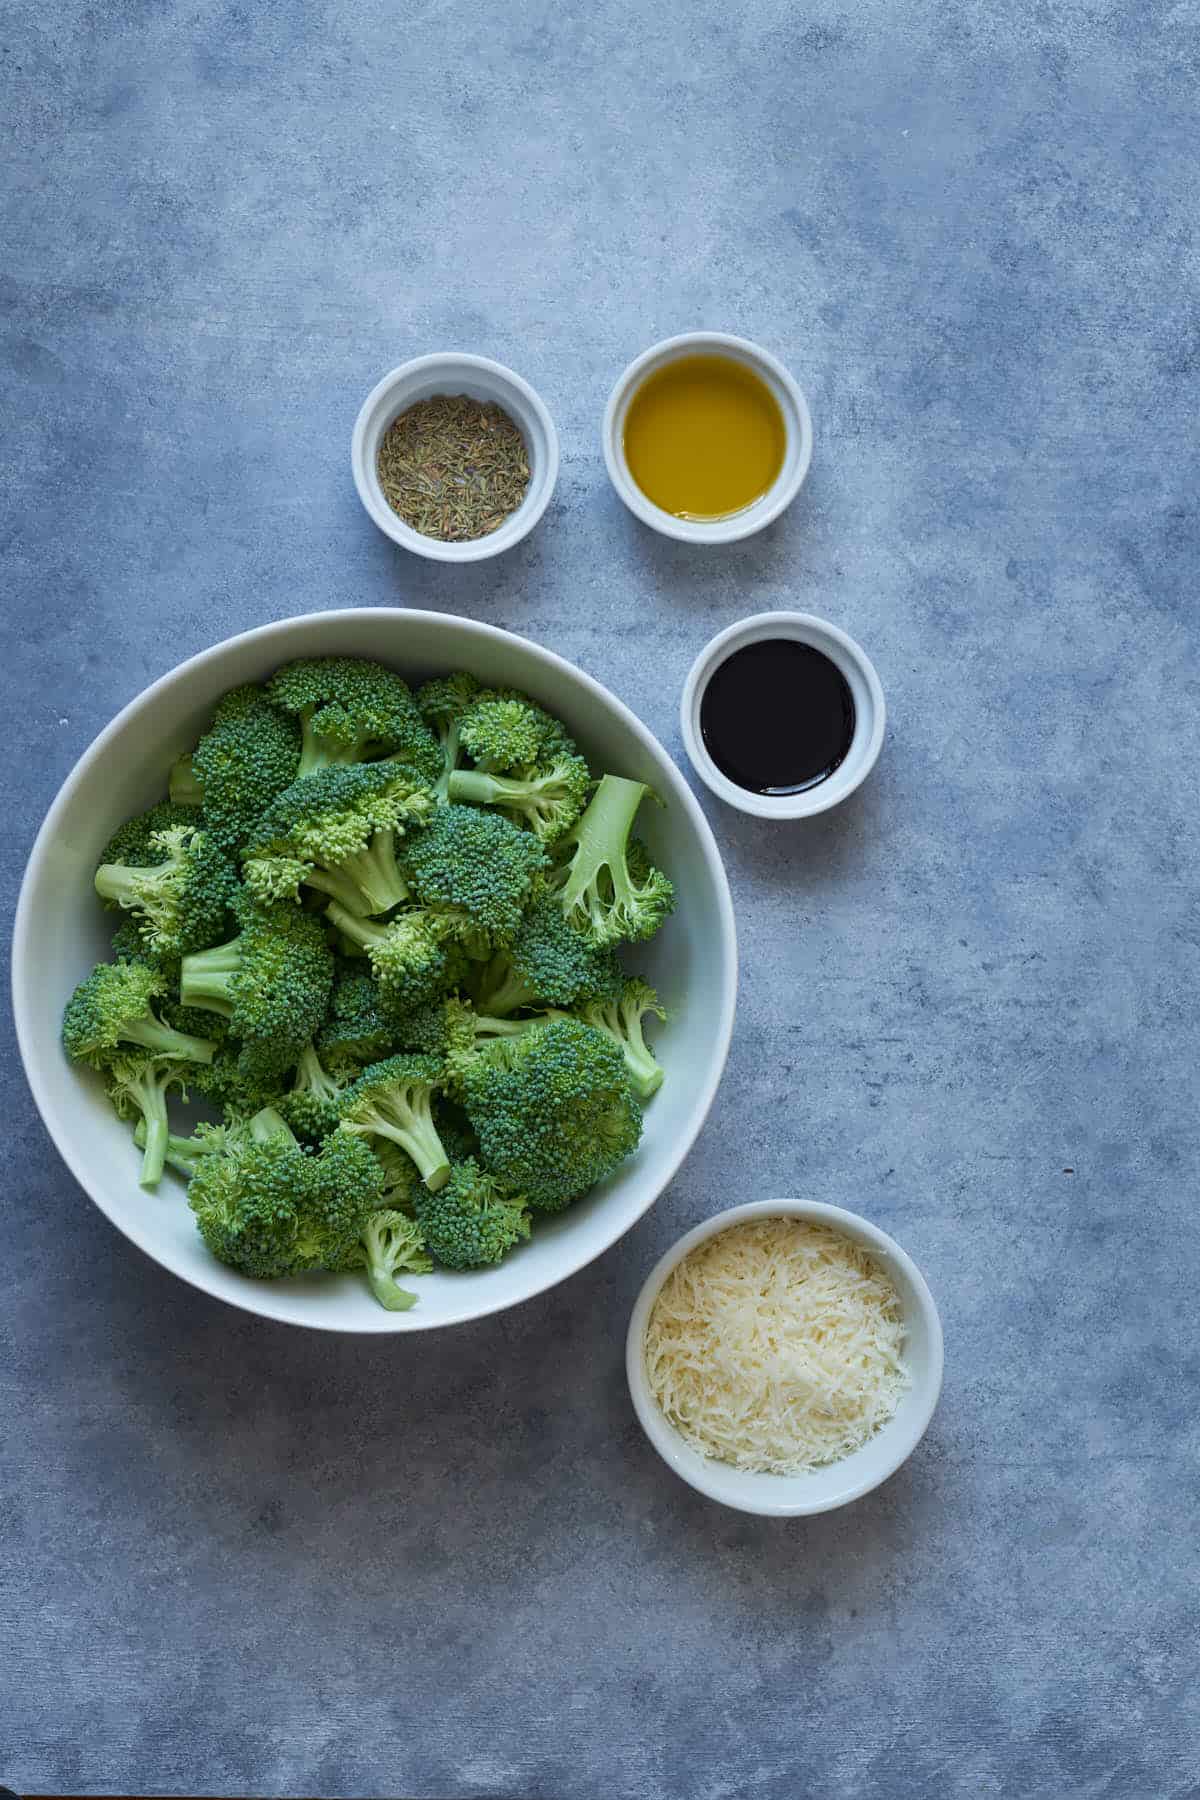 Ingredients to make air fryer broccoli parmesan.